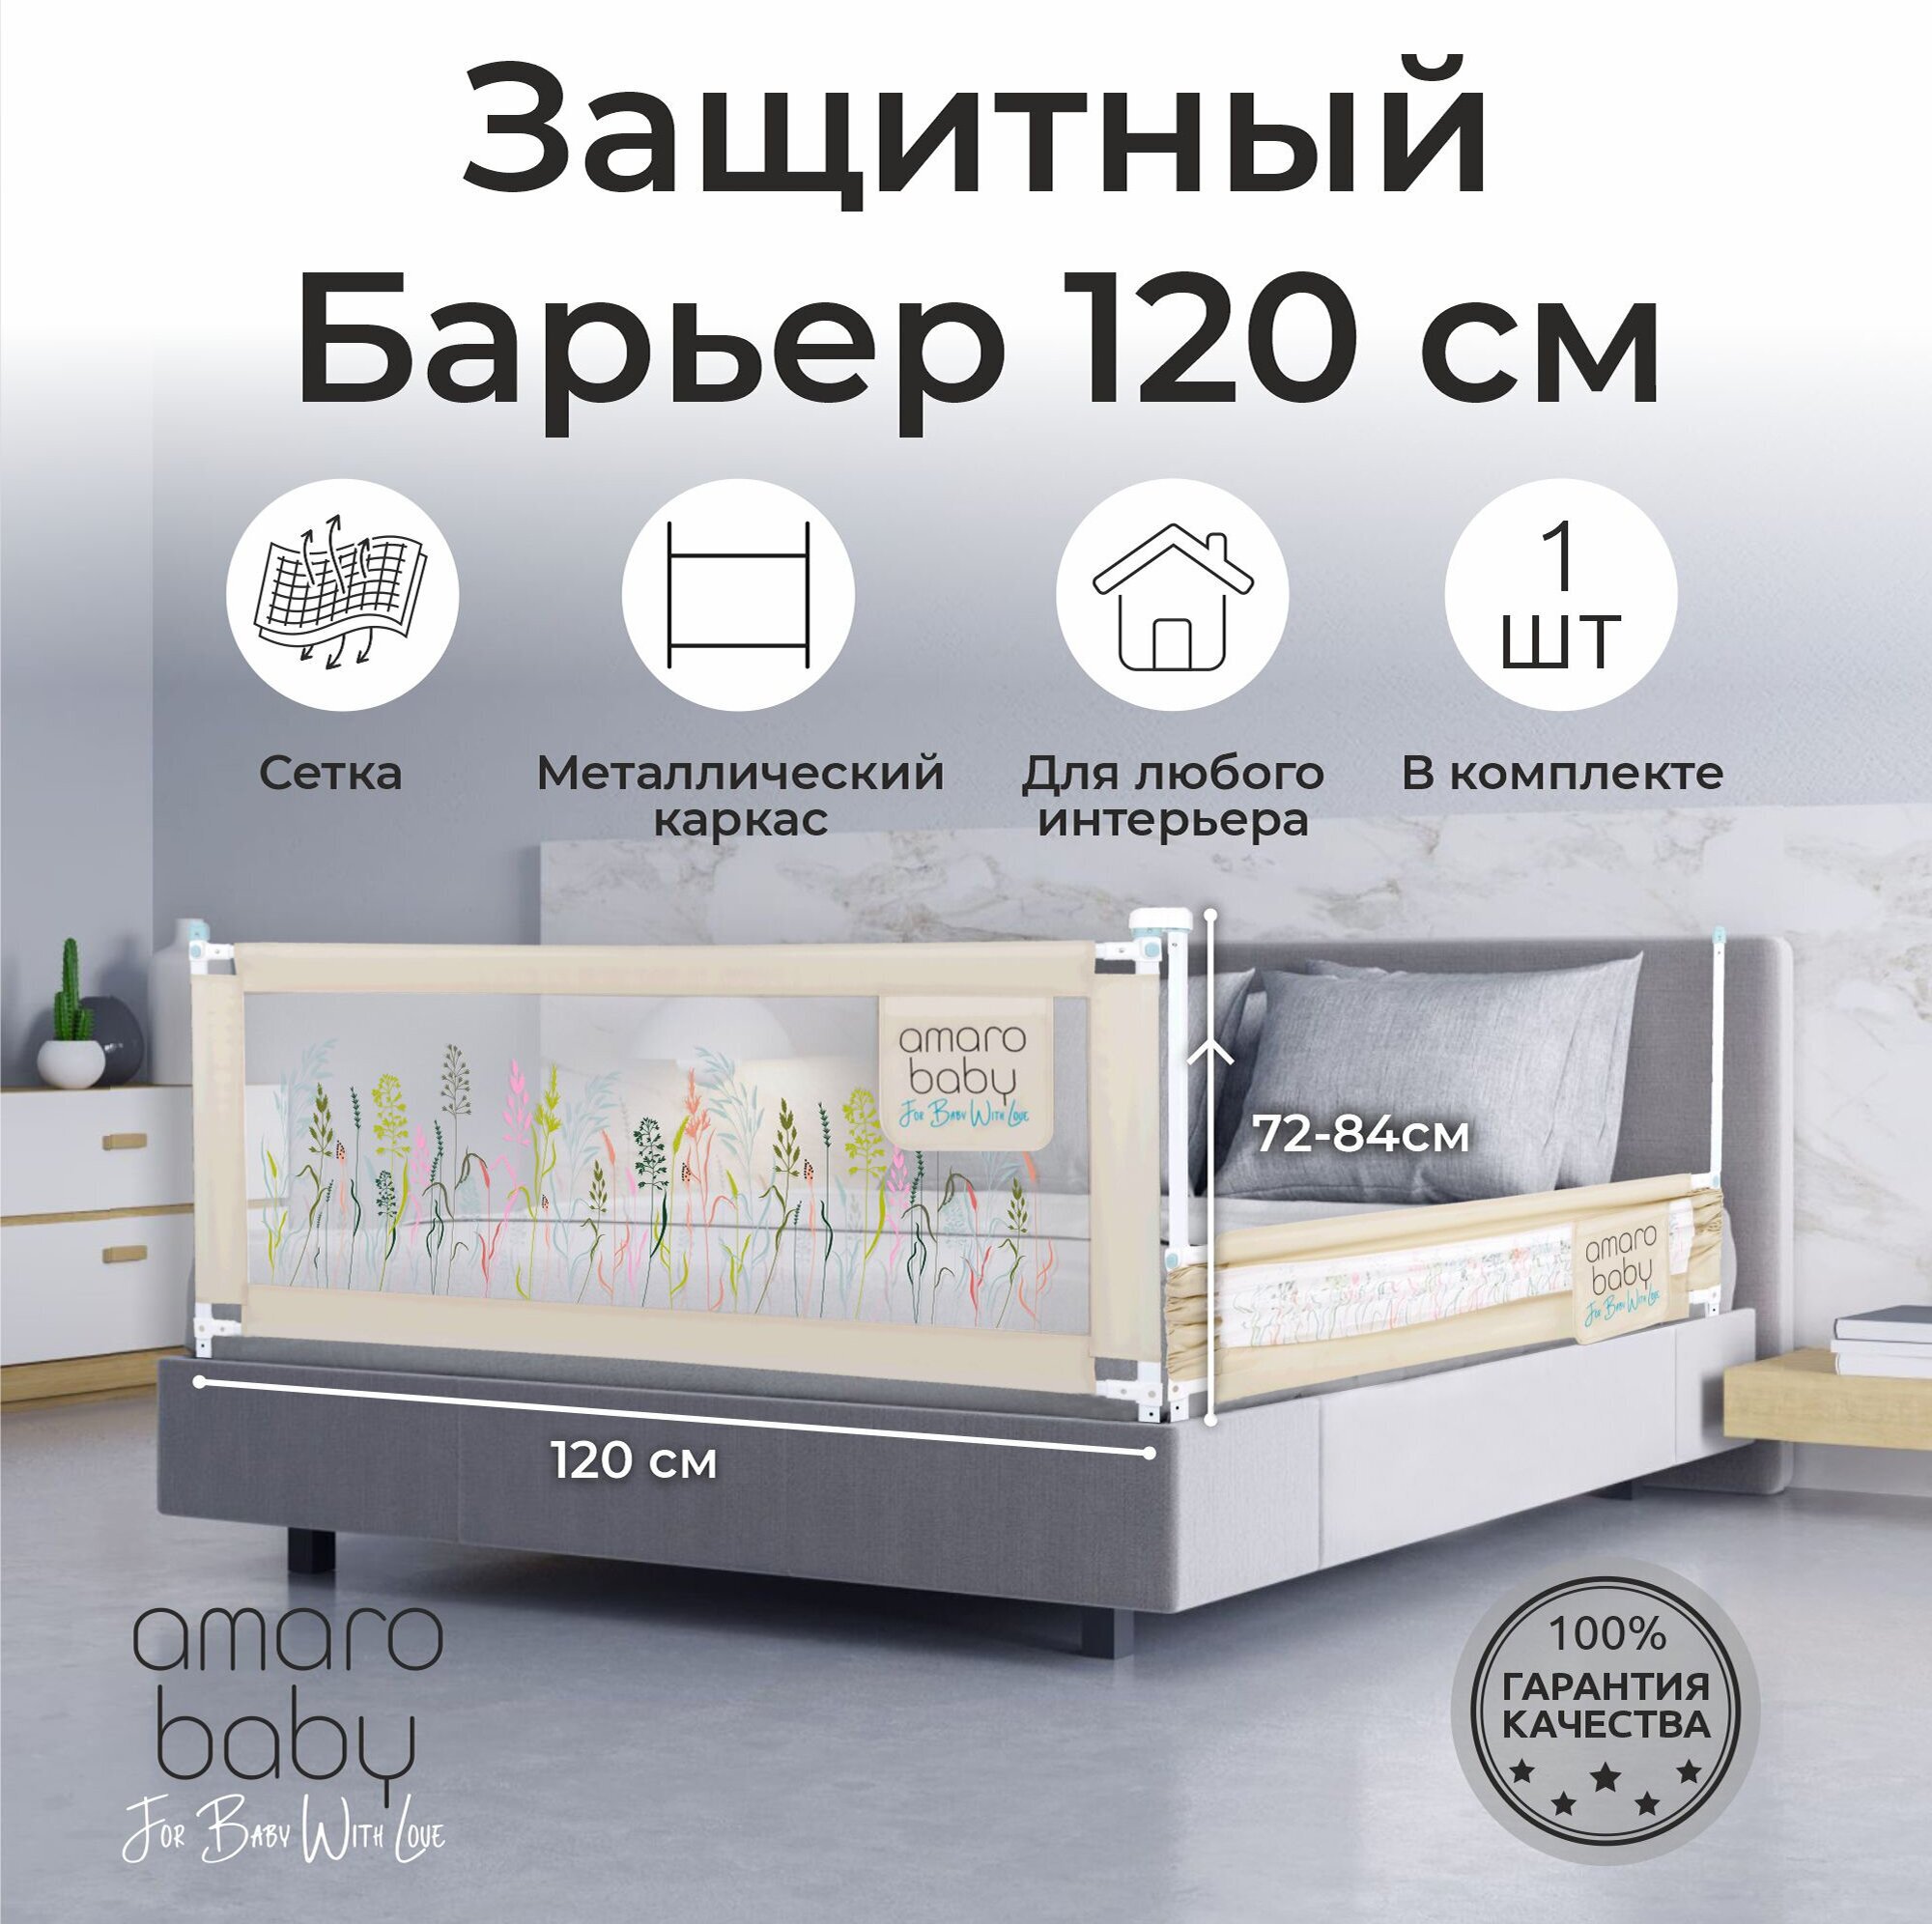 Барьер защитный для кровати AMAROBABY safety of dreams, бежевый, 120 см.